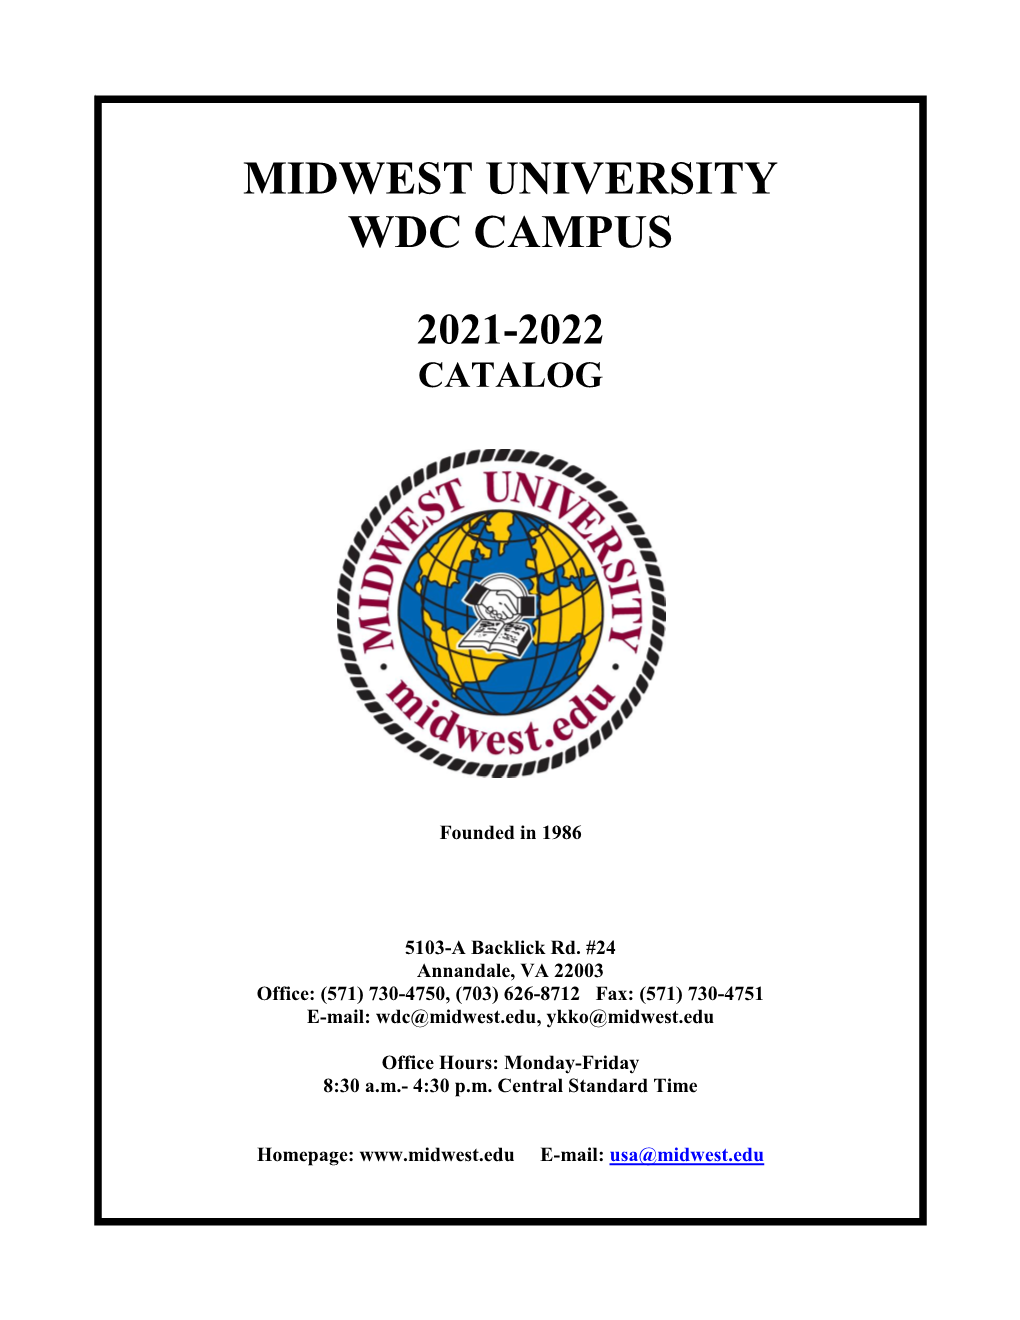 Midwest University Wdc Campus 2021-2022 Catalog